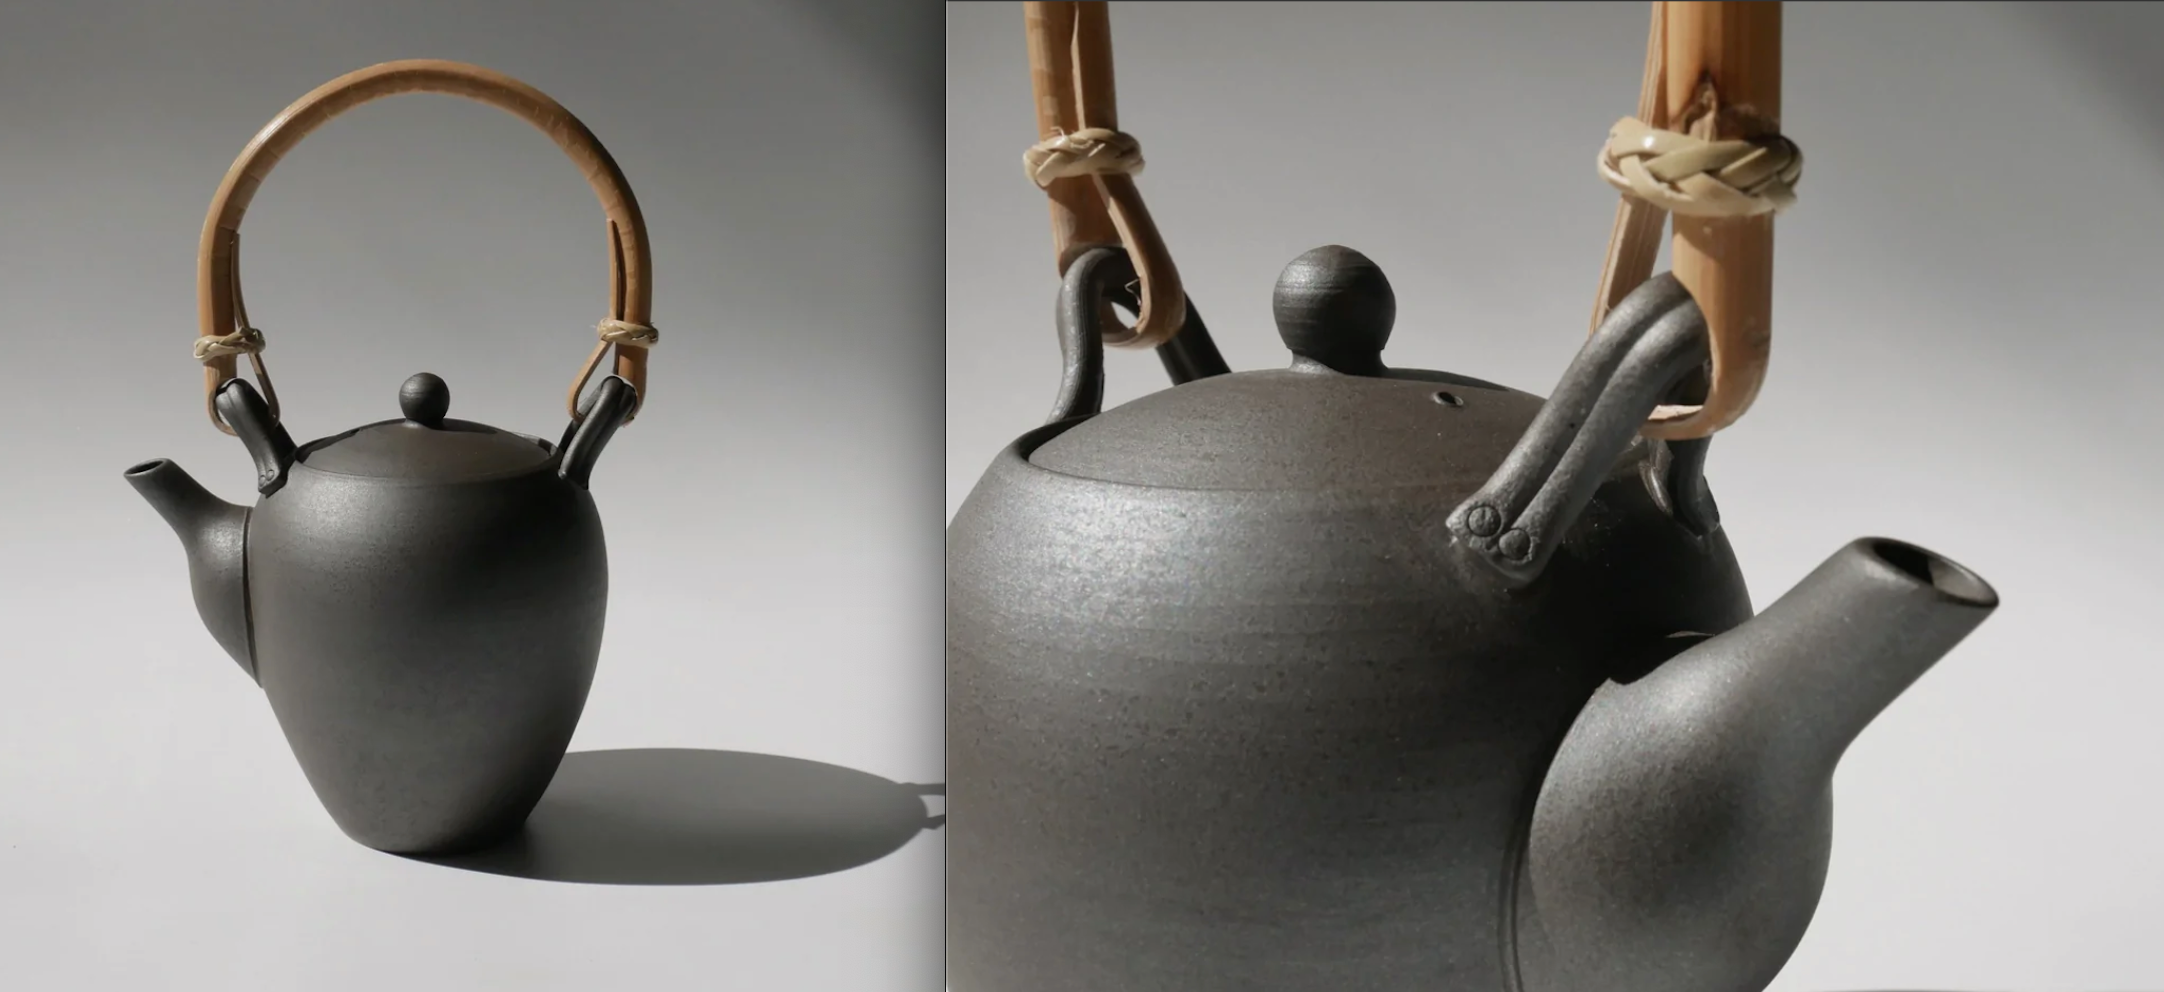 Nankei Pottery's dobin side-by-side